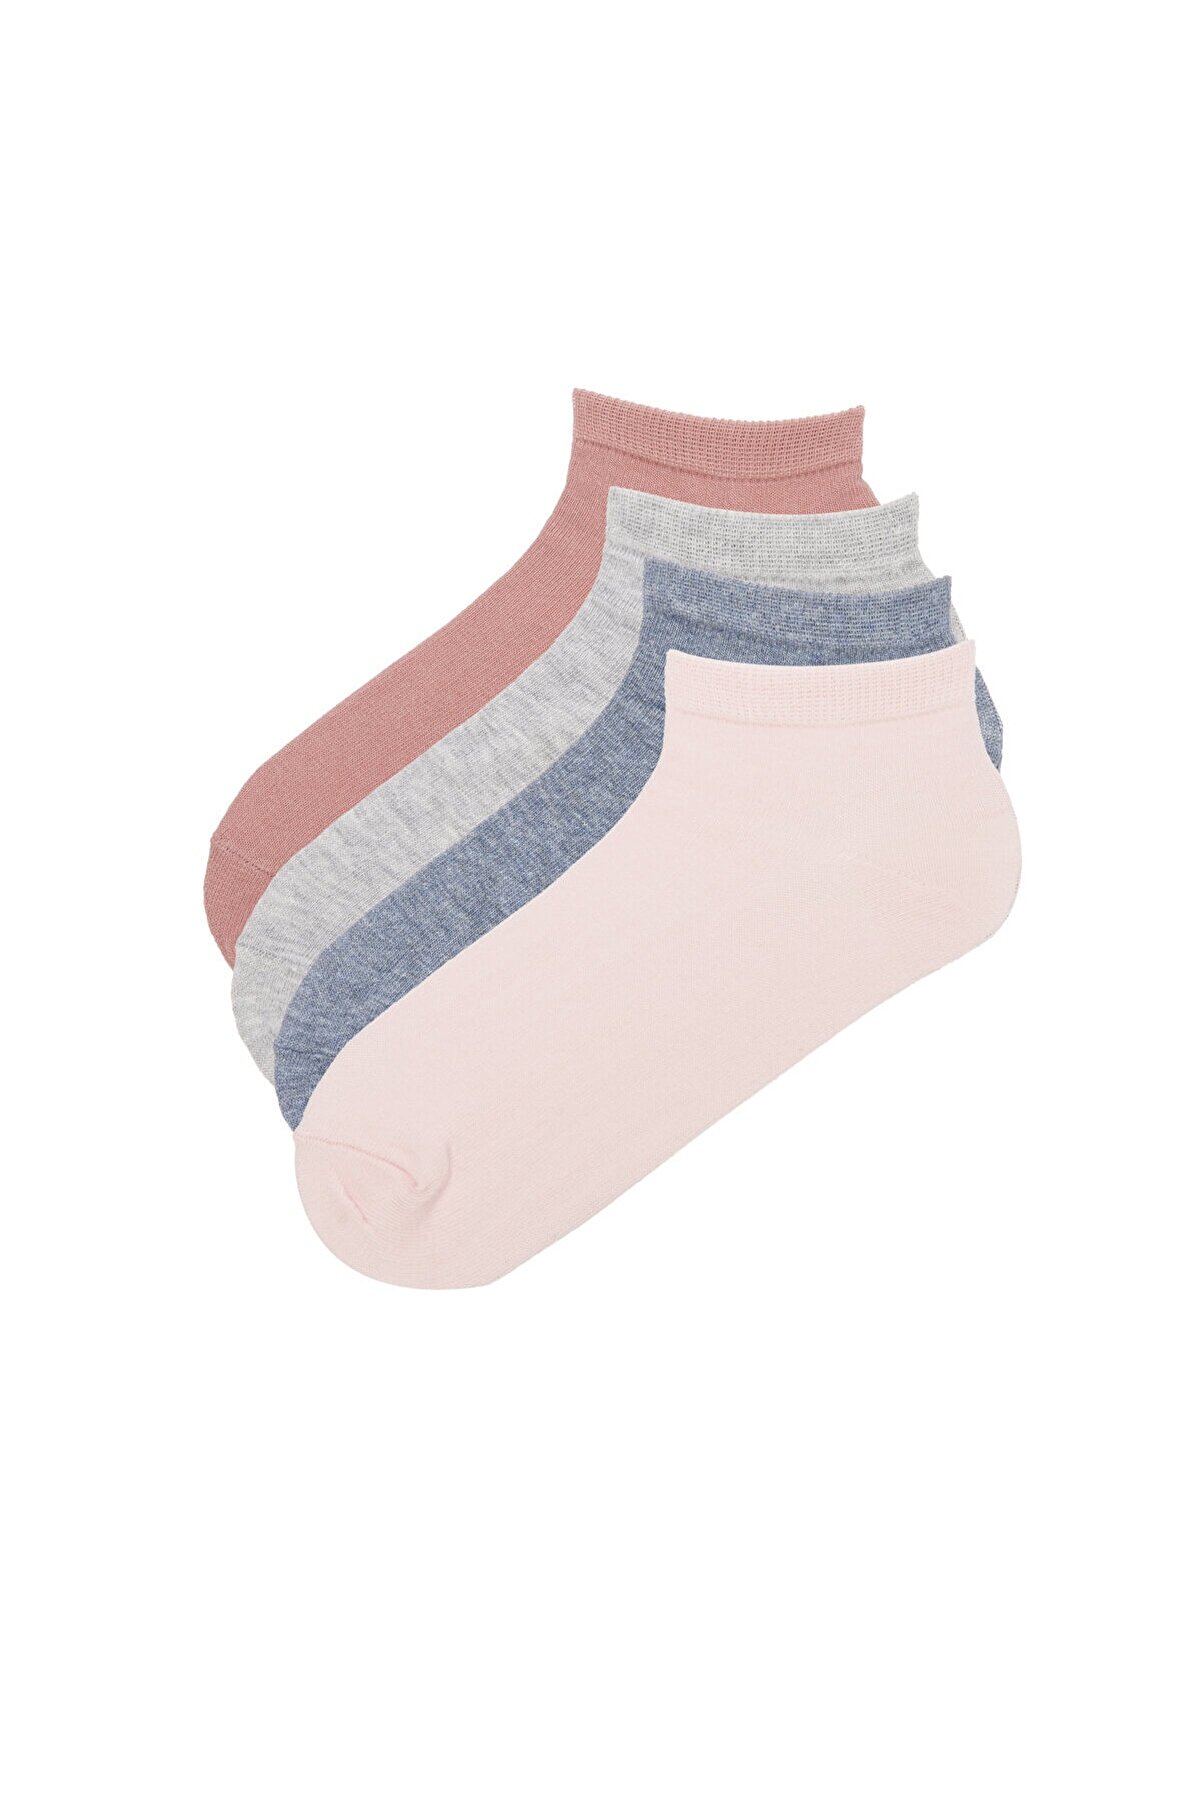 Penti Pembe Basic 4 Lü Patik Çorap